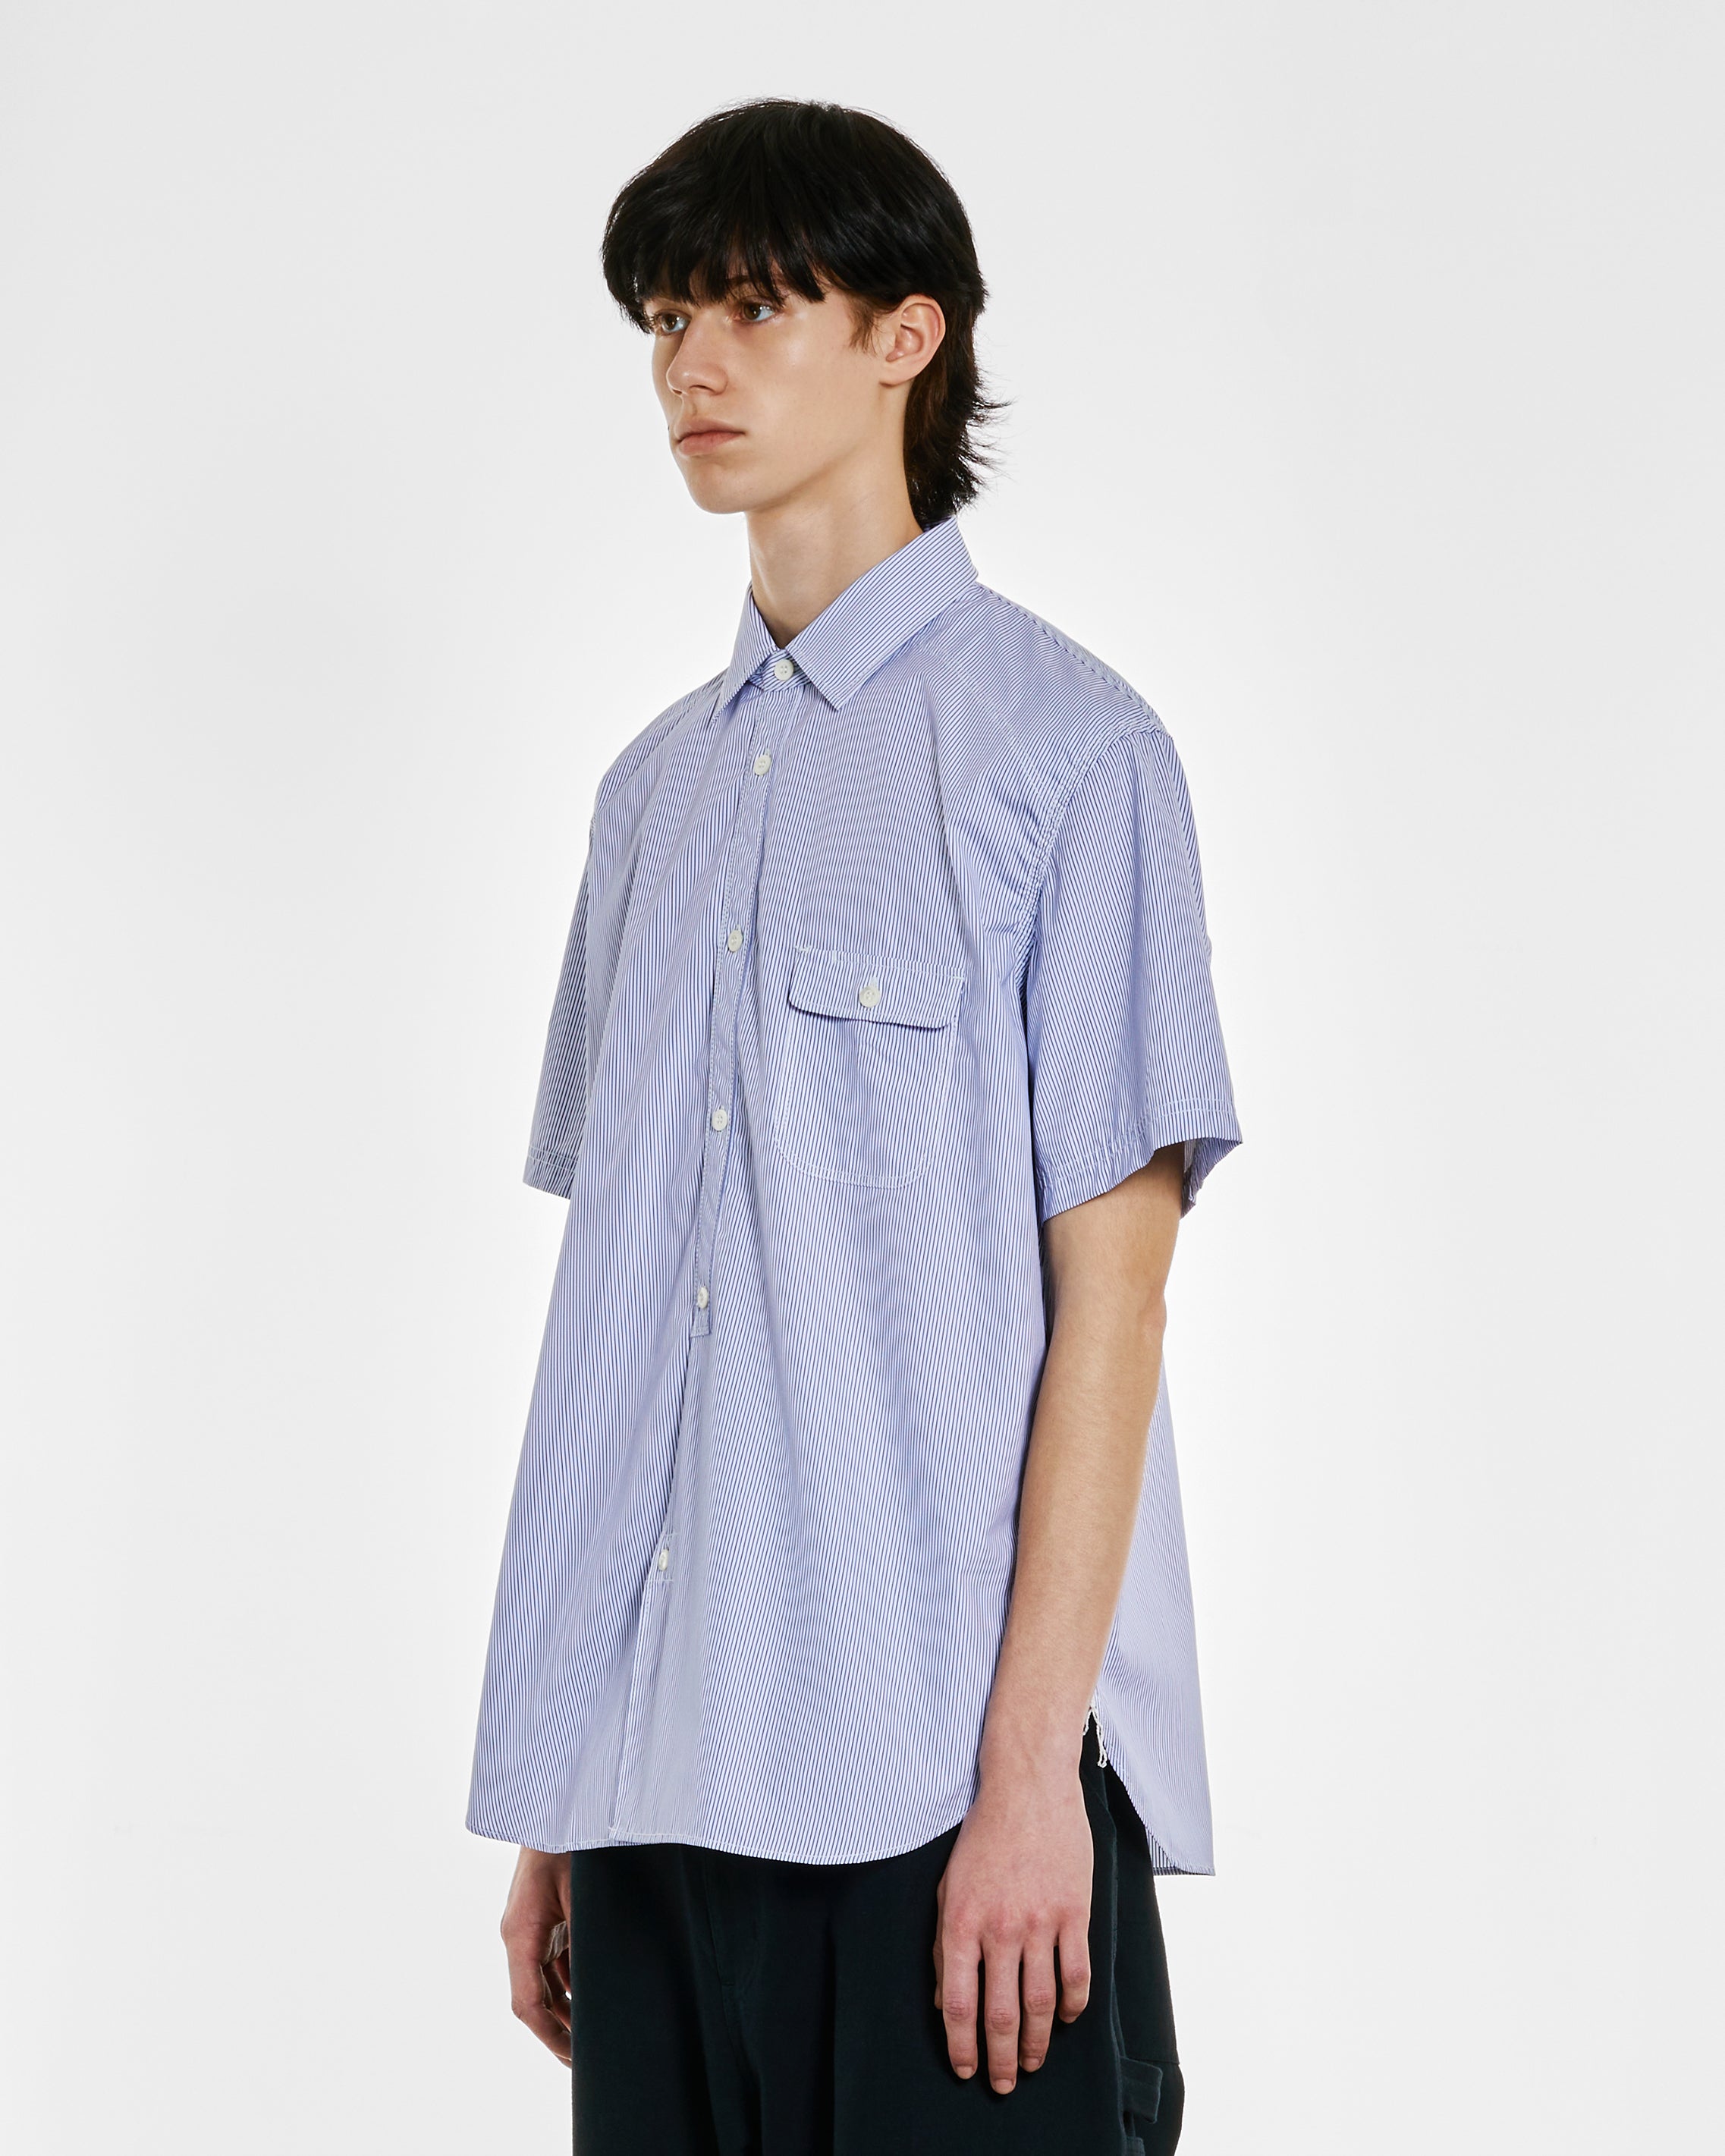 Junya Watanabe MAN - Men's Short Sleeve Shirt - (White/Blue)